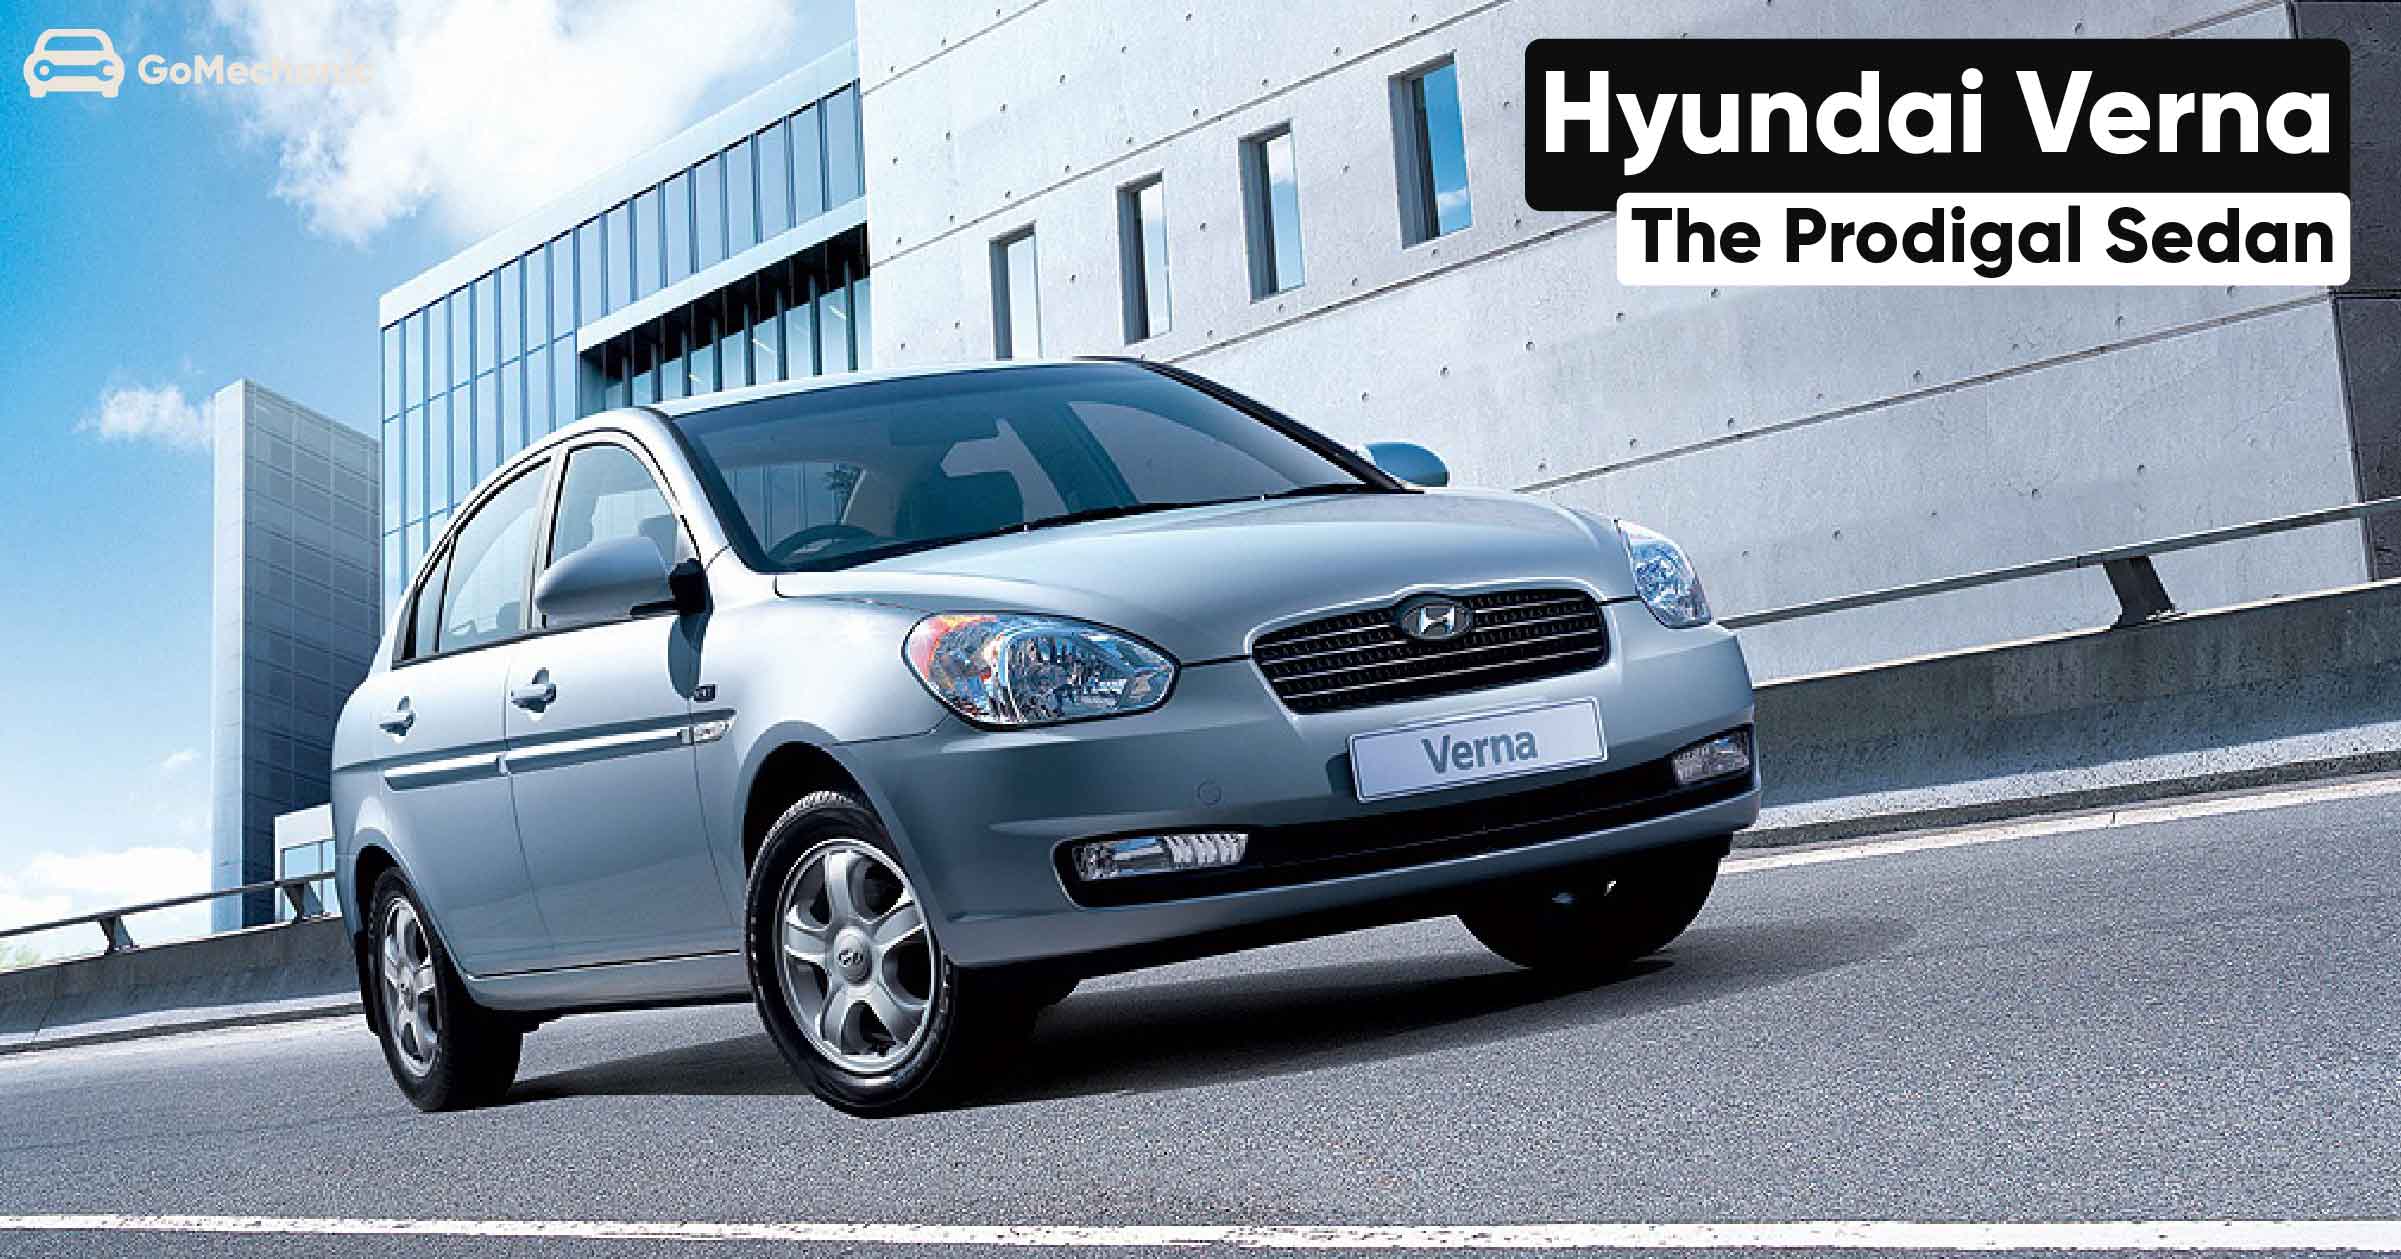 The Hyundai Verna Prodigal Sedan